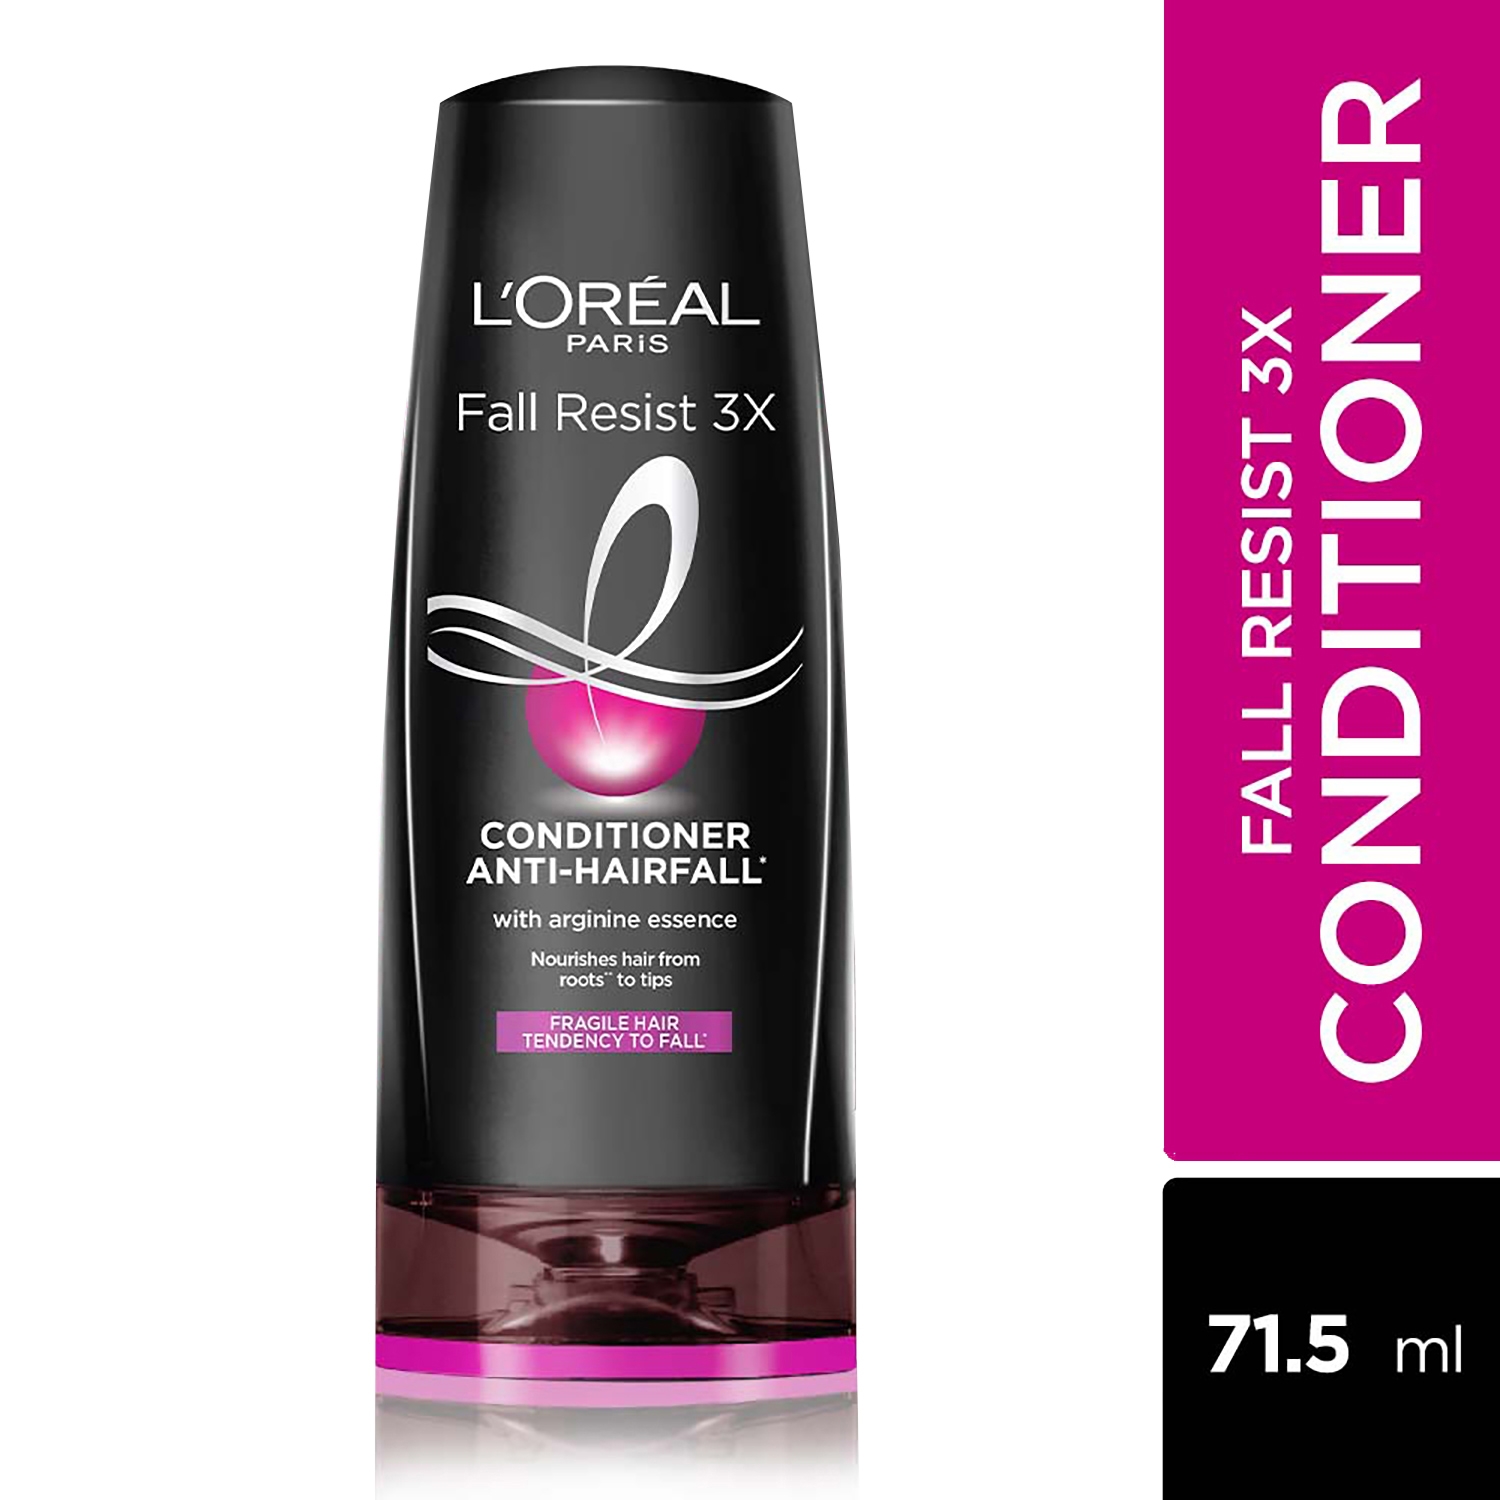 L'Oreal Paris | L'Oreal Paris Fall Resist 3X Anti-Hairfall Conditioner (71.5ml)